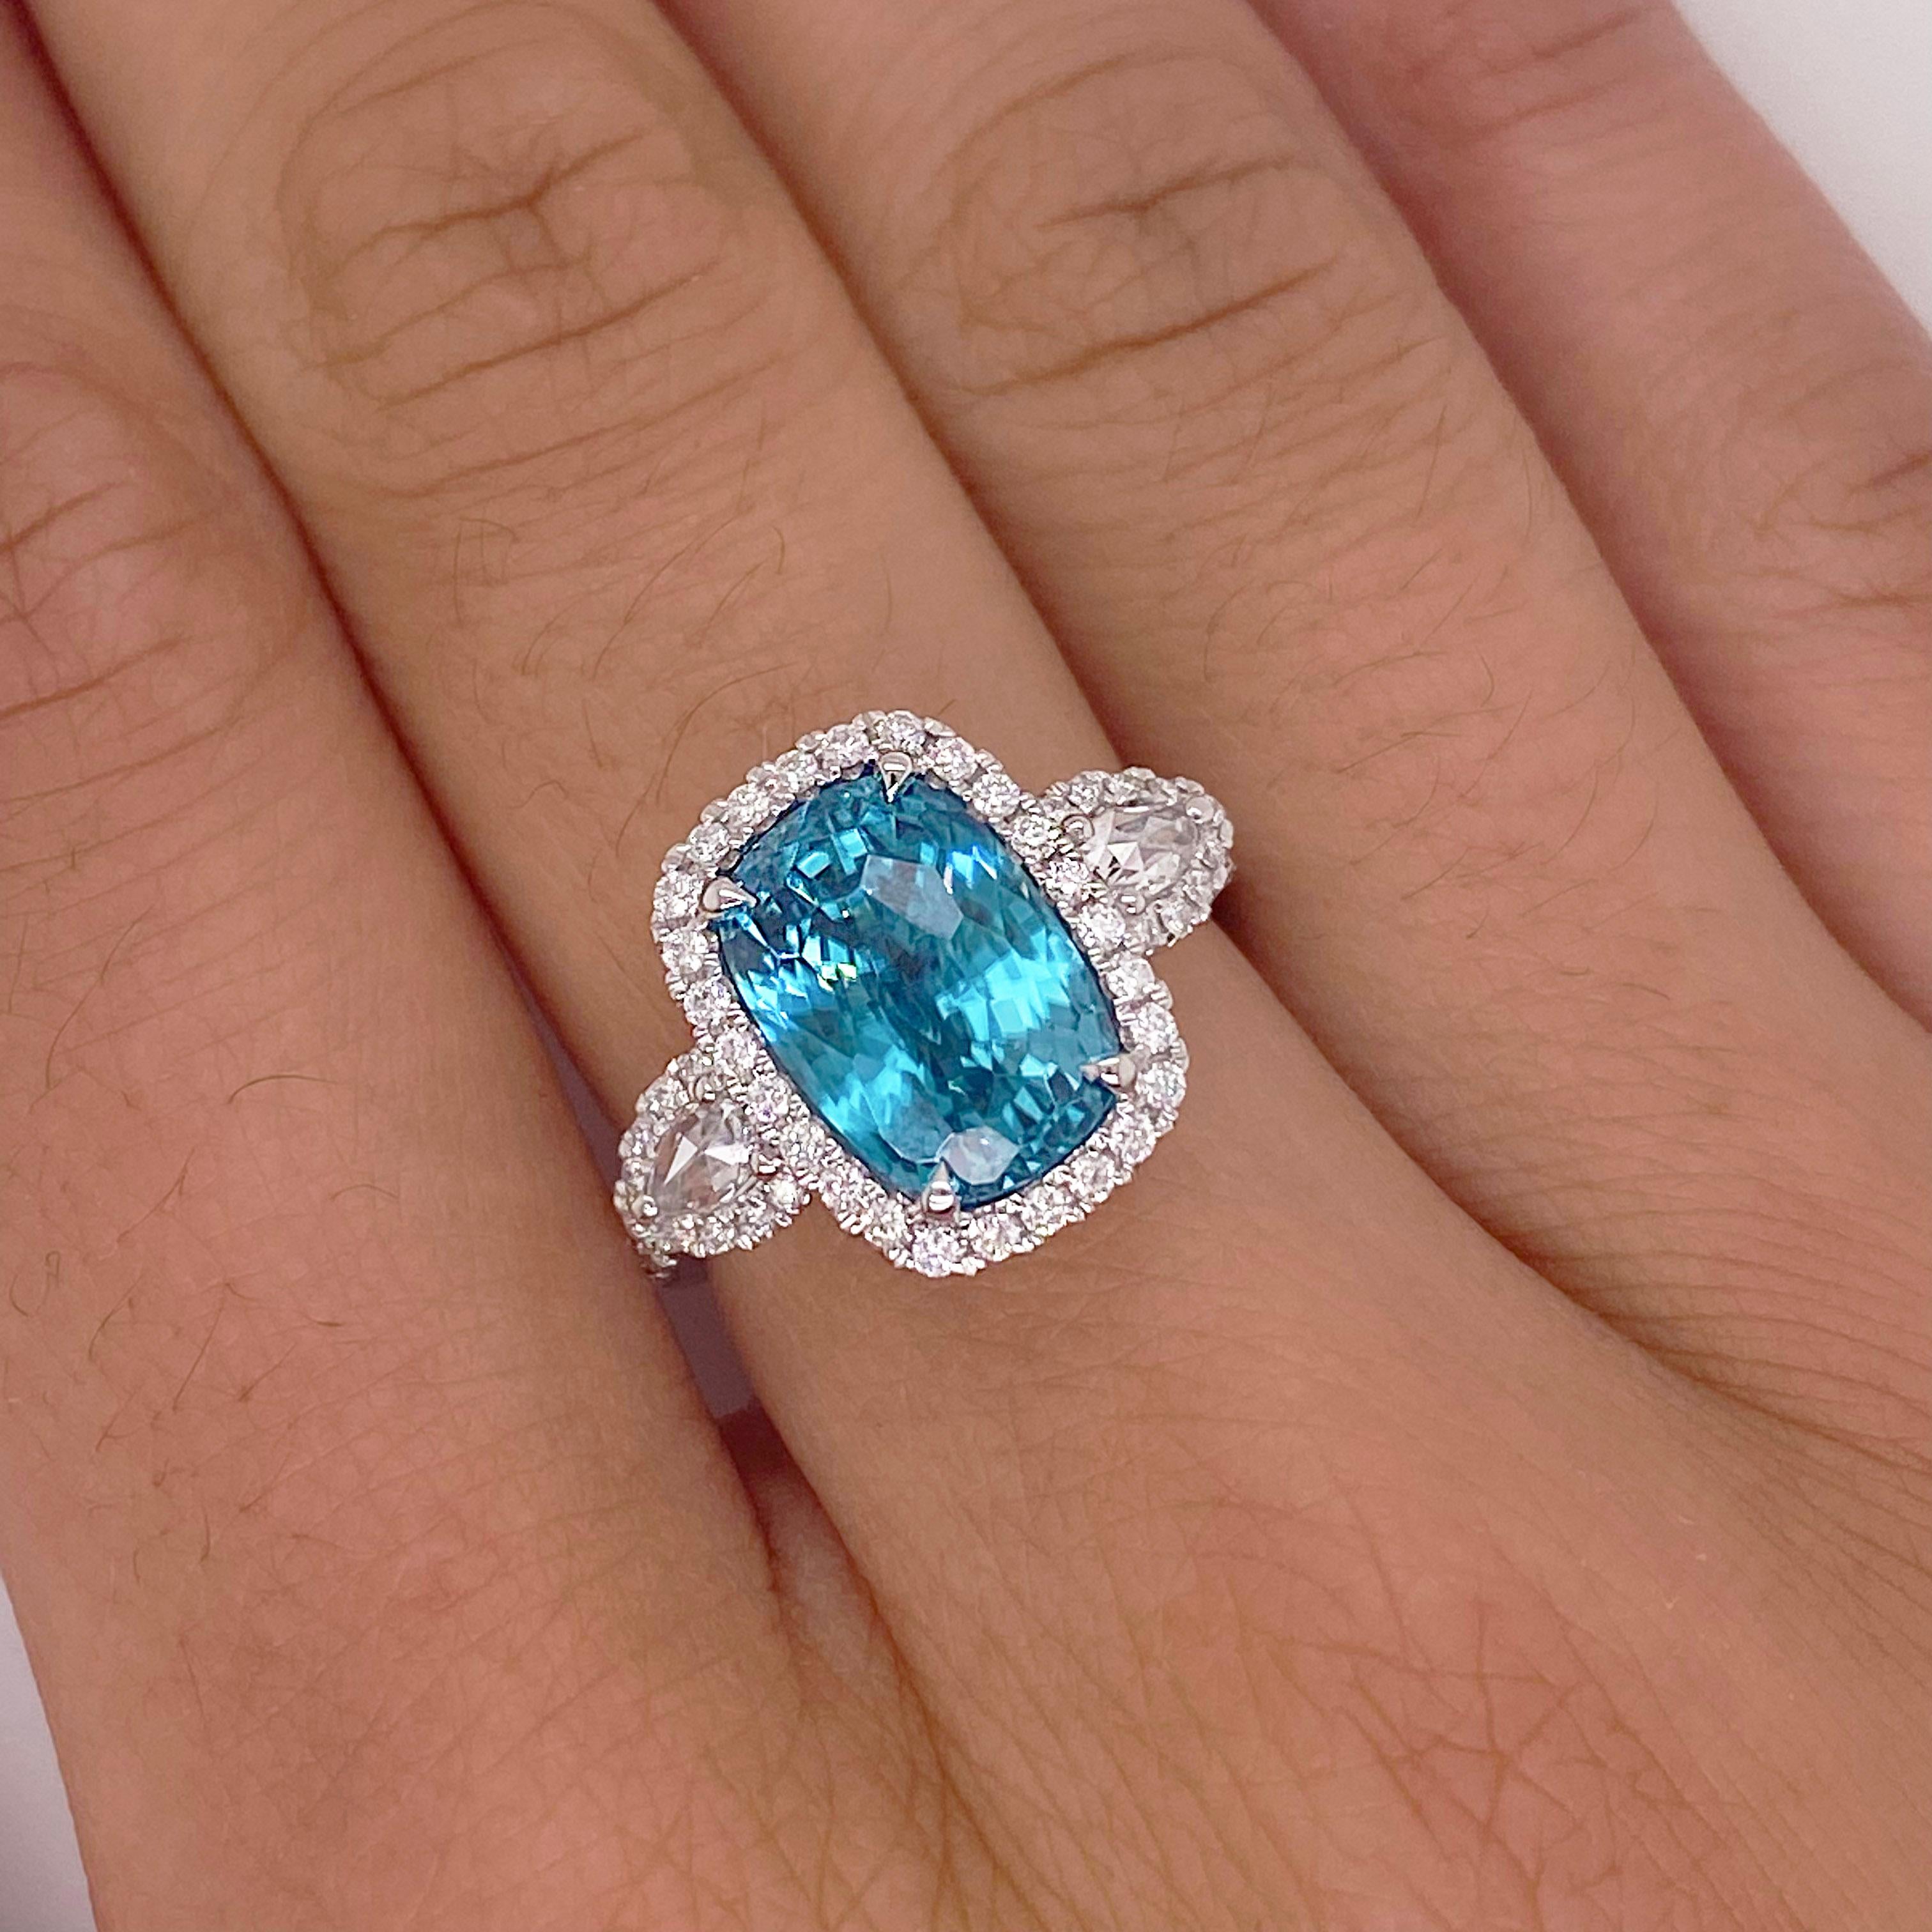 For Sale:  Rare Blue Zircon Ring, 8.01 Ct Blue Zircon with Diamond Halo, Blue Zircon Ring 4